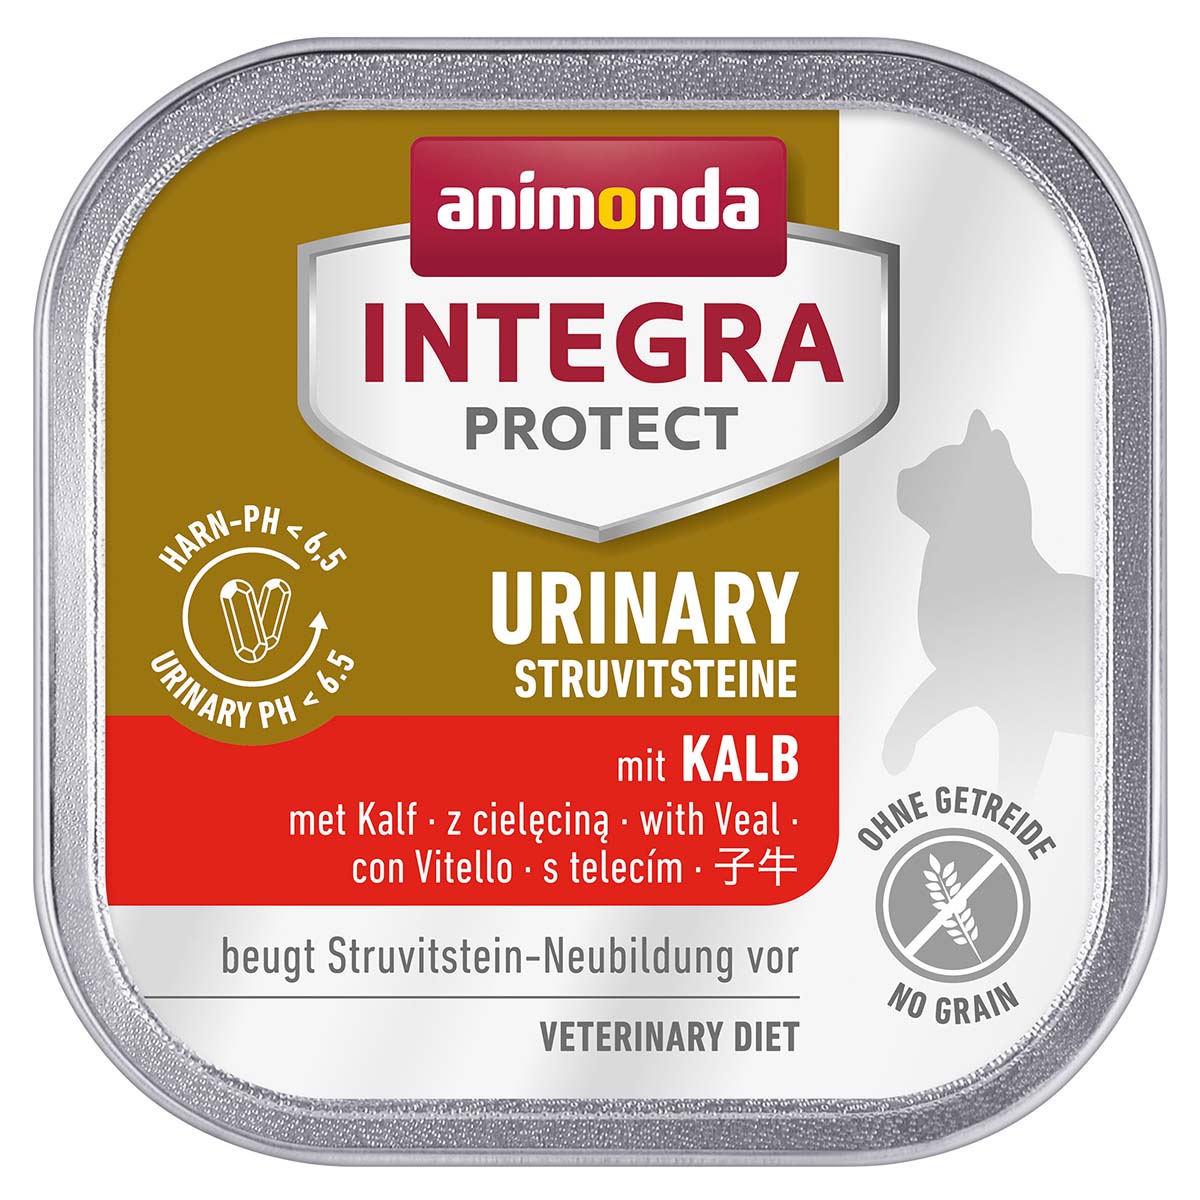 animonda INTEGRA PROTECT Adult Urinary Struvitstein mit Kalb 6x100g von animonda Integra Protect